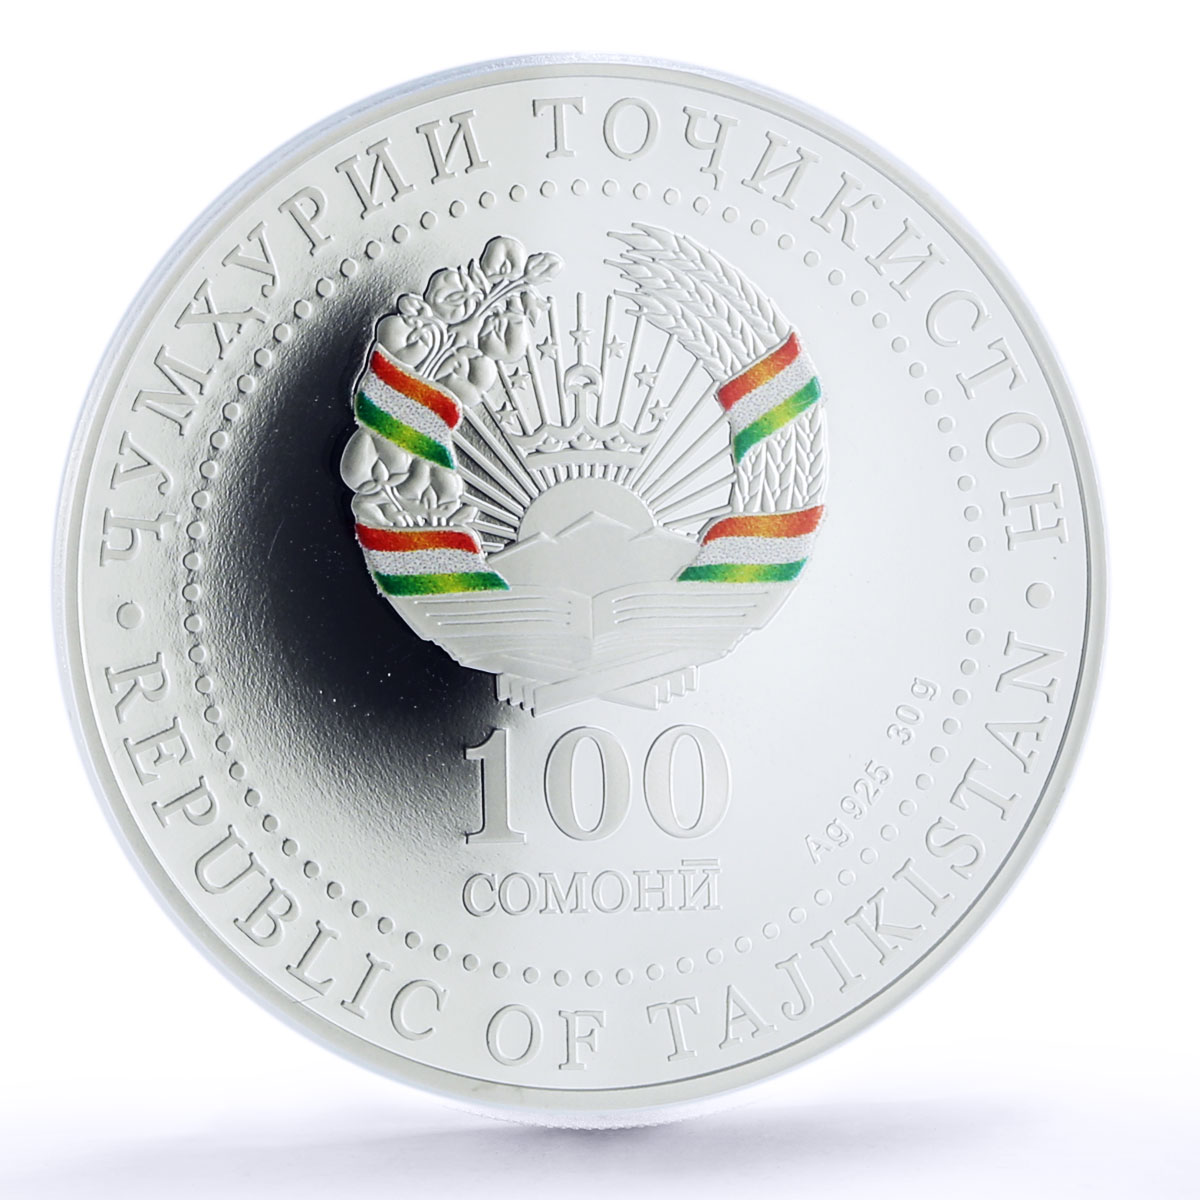 Tajikistan 100 somoni 30 Years Of Independence PR70 PCGS silver coin 2021